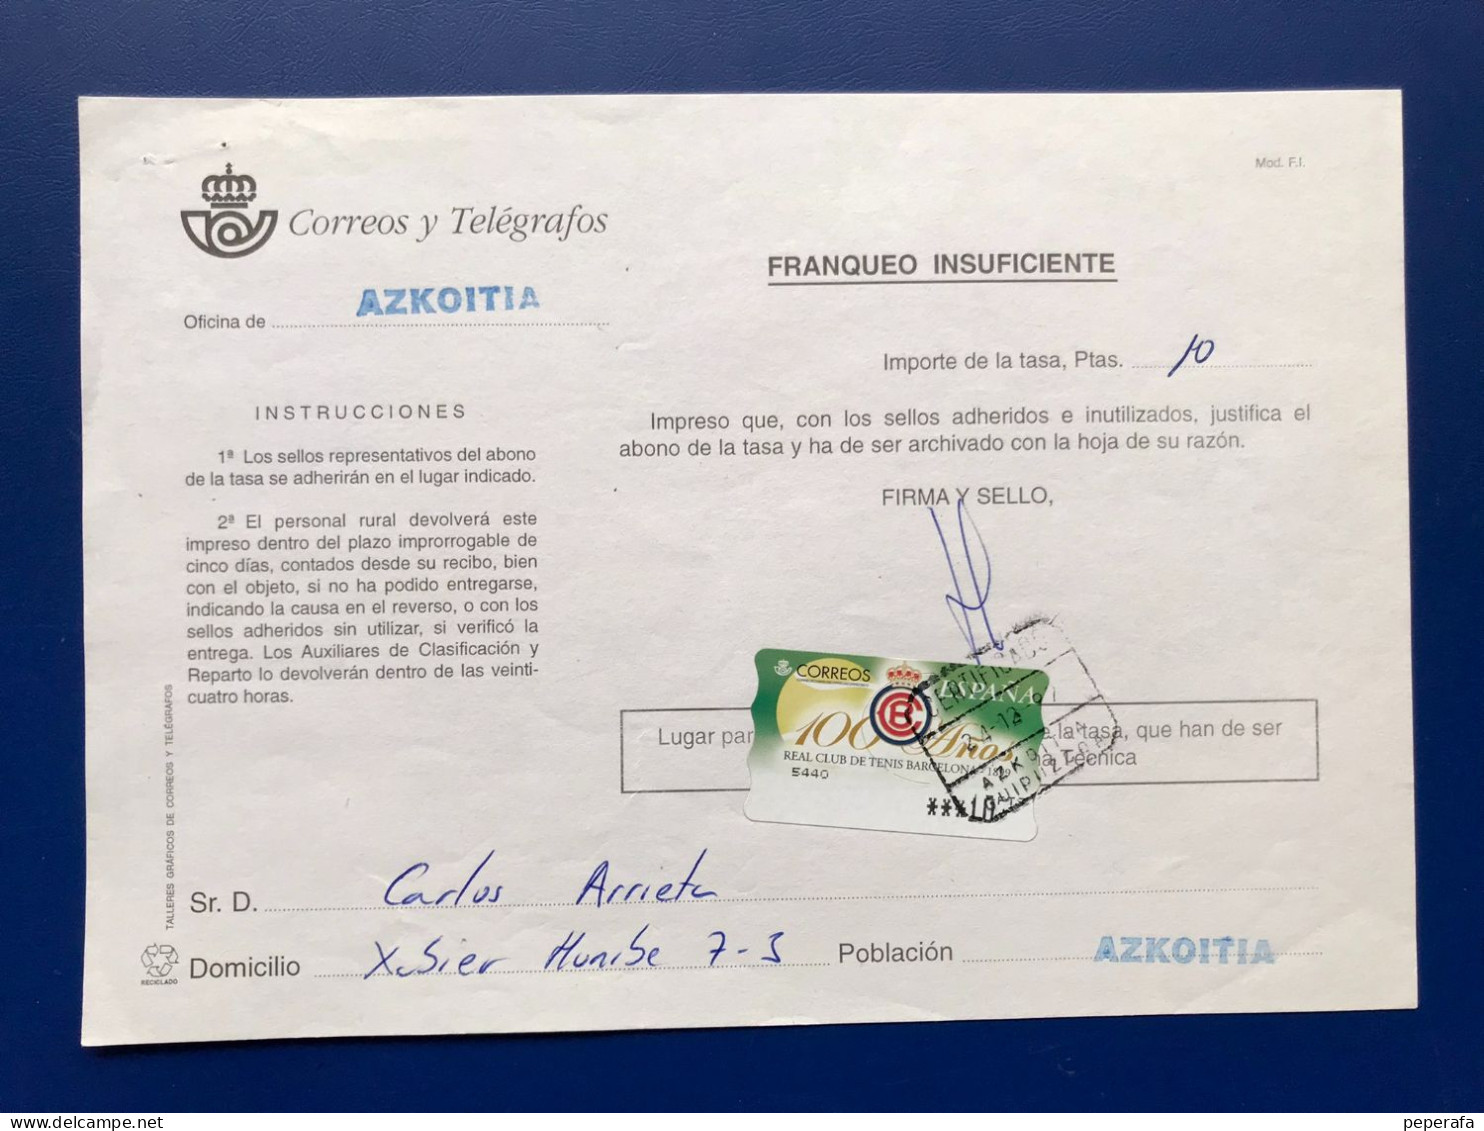 España Spain 1999, ATM 100 AÑOS RC TENIS BARCELONA, DOCUMENTO POSTAL FRANQUEO INSUFICIENTE 10 PTS, EPELSA, RARO!!! - Vignette [ATM]